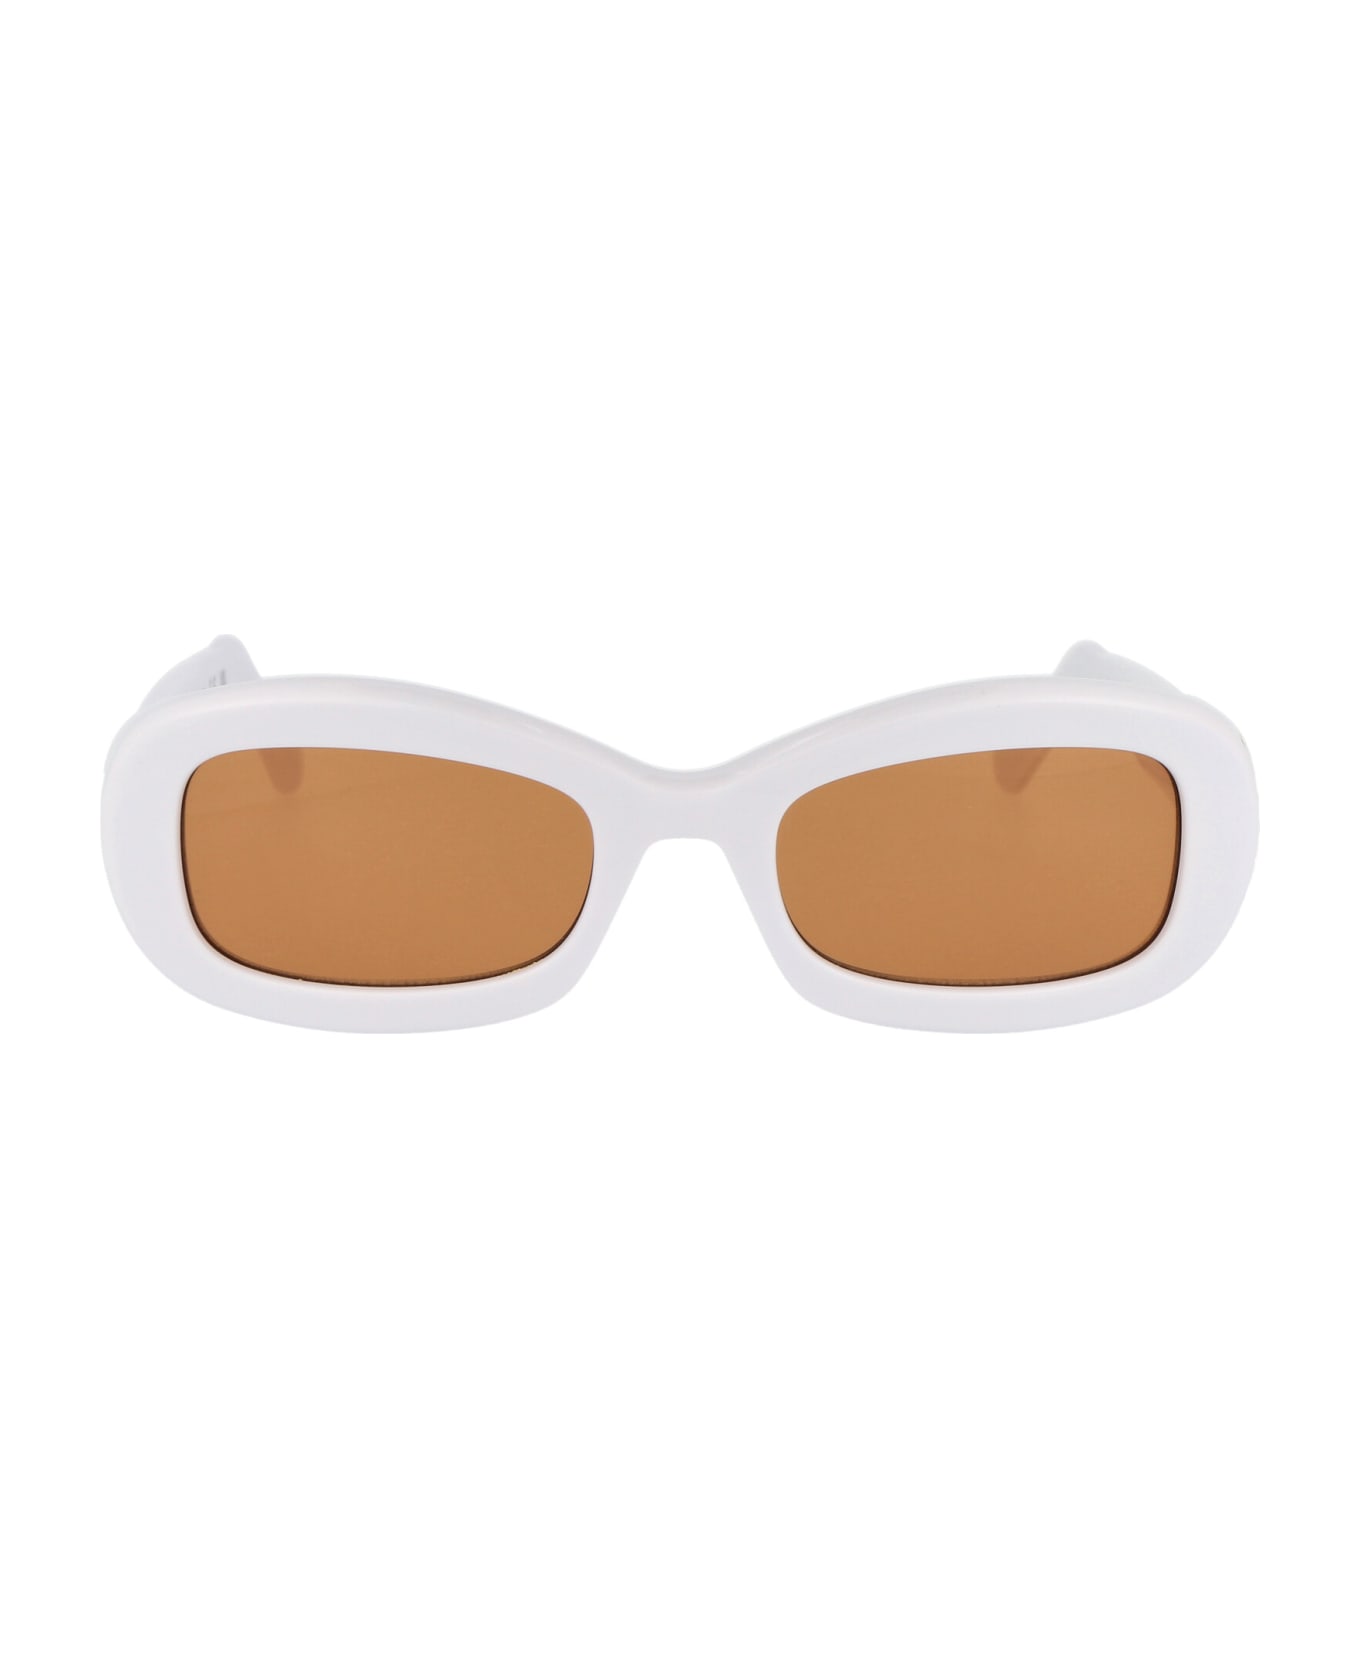 GCDS Gd0027 Sunglasses - 21E Bianco/Marrone サングラス